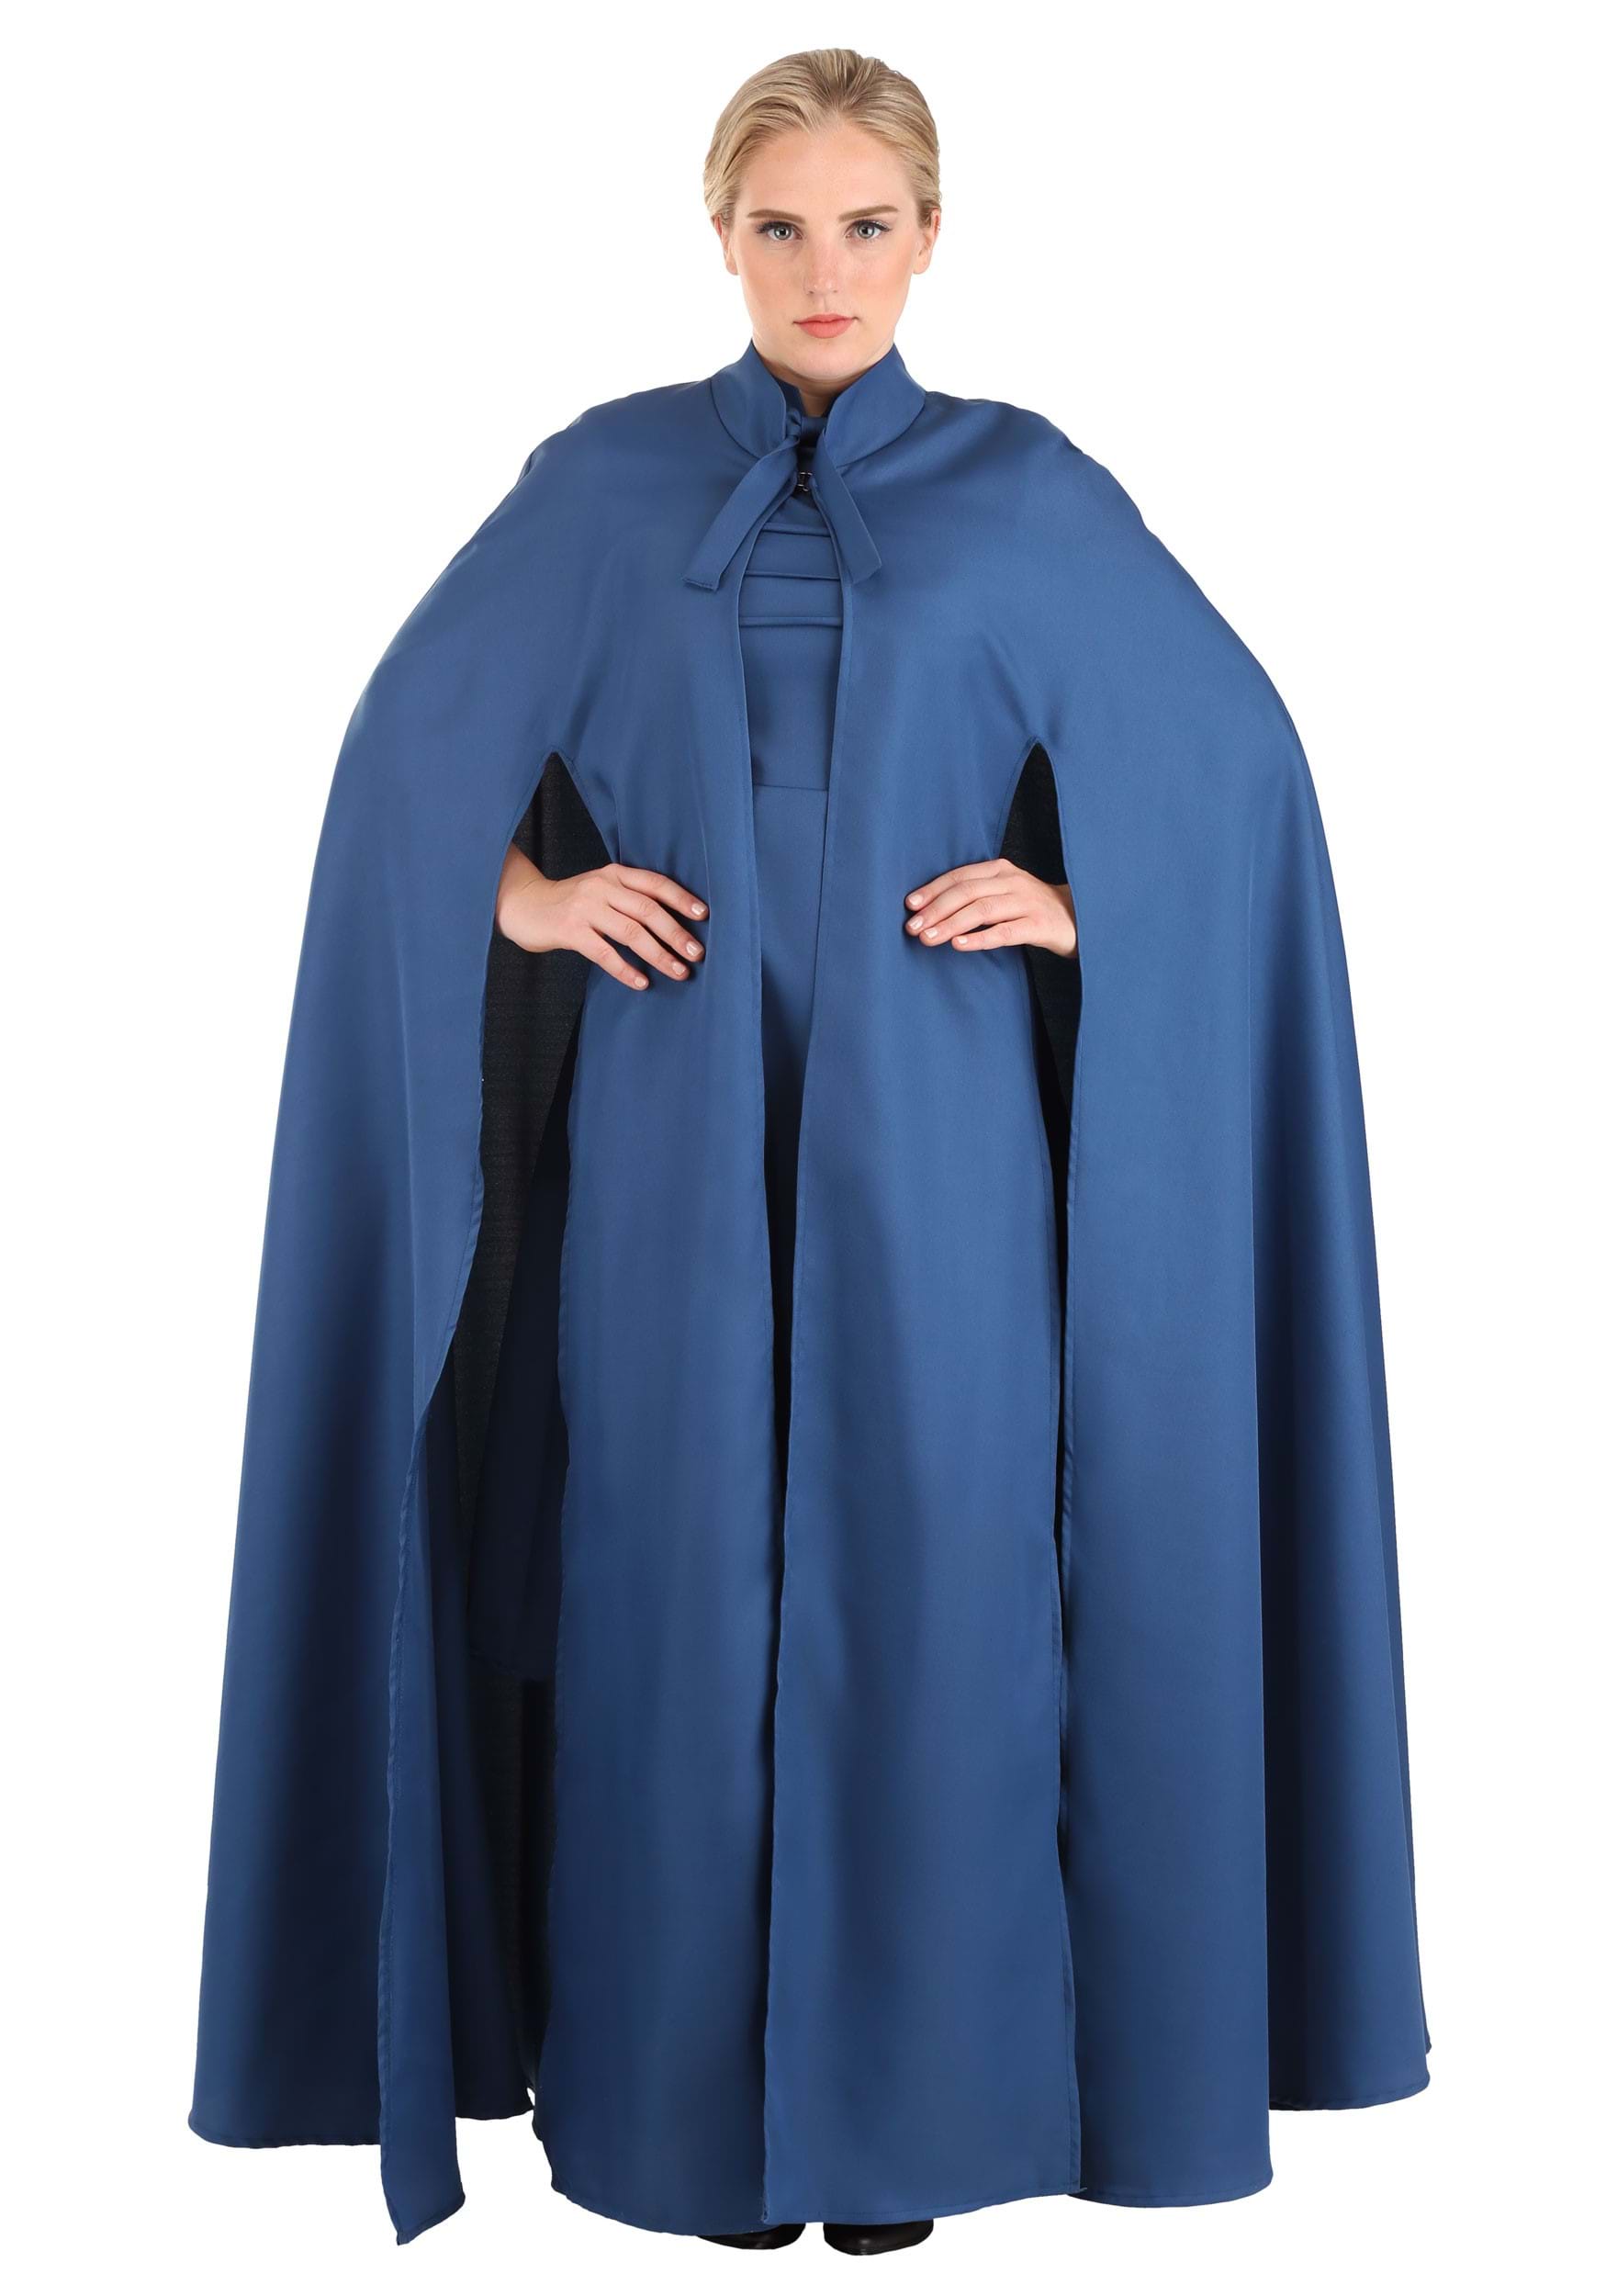 Photos - Fancy Dress FUN Costumes Women's Handmaid's Tale Wives of Gilead Costume Blue FUN1388A